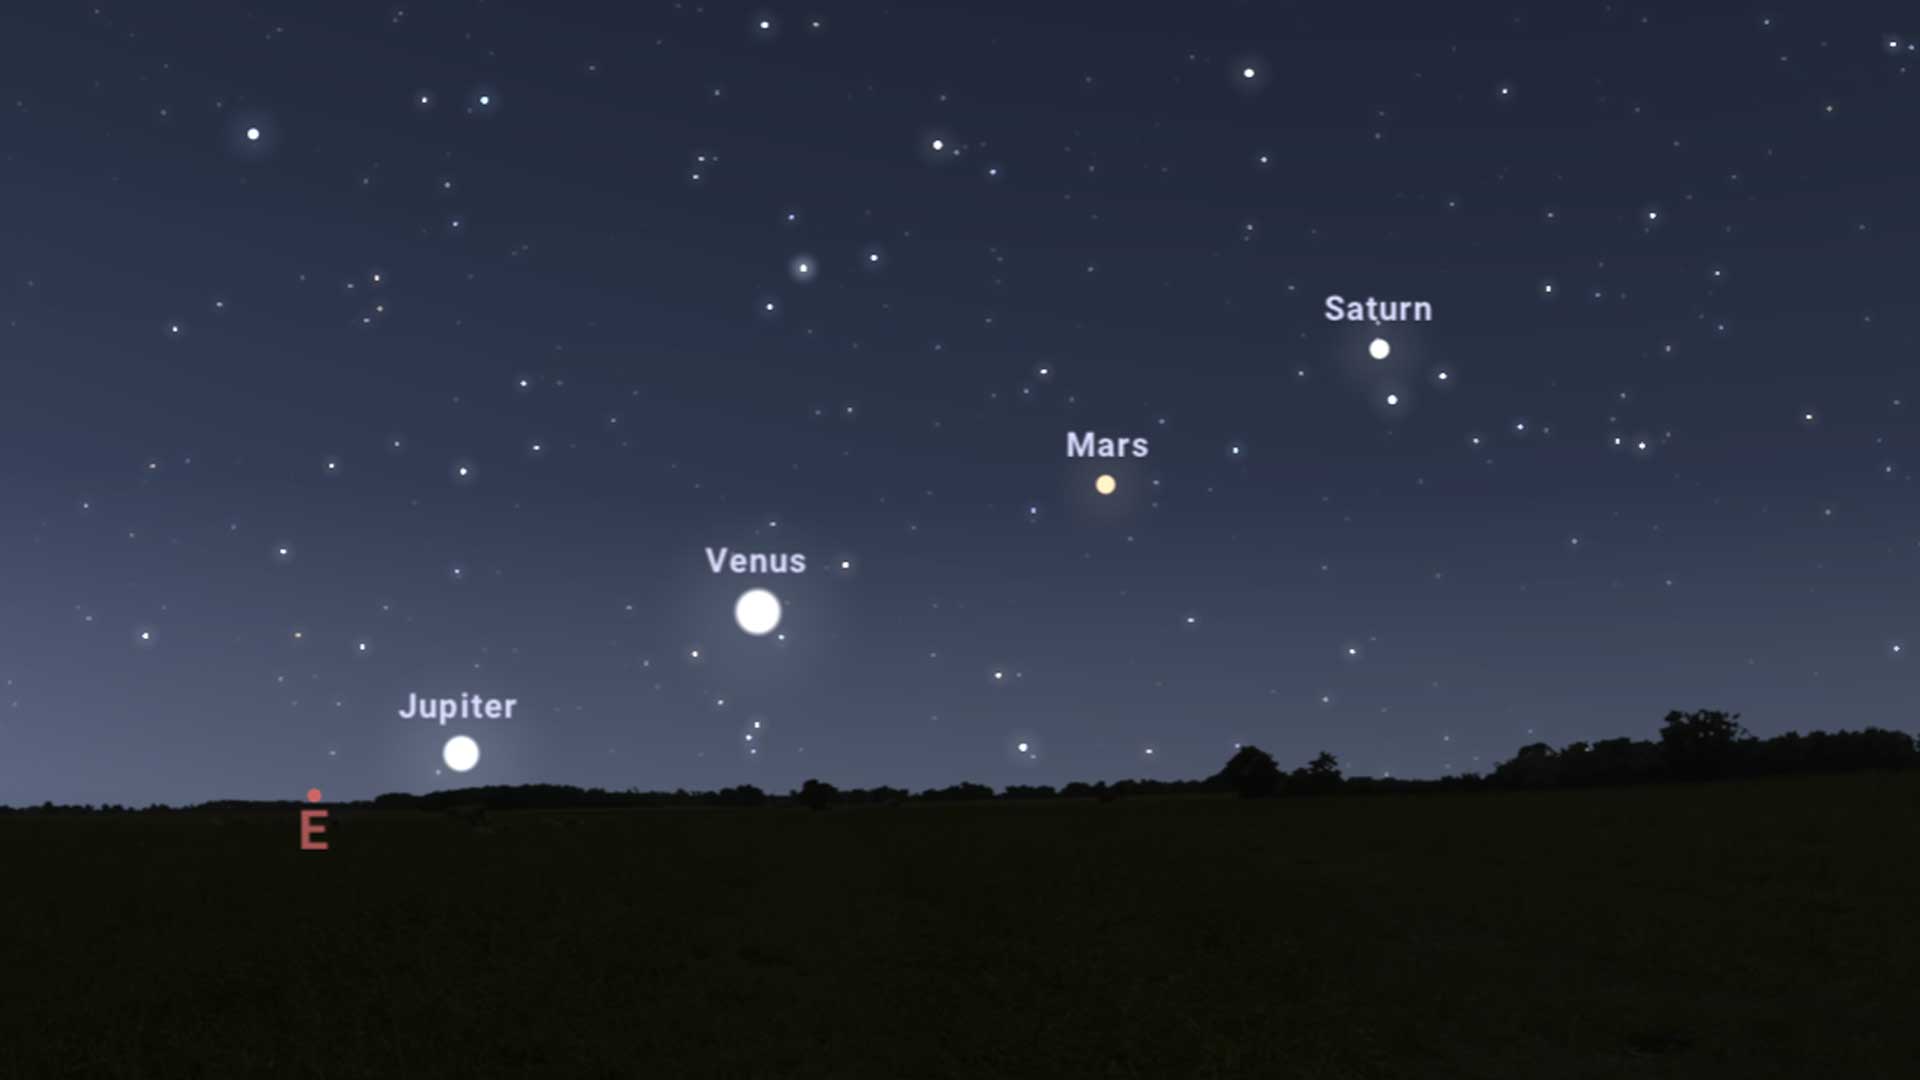 Planets aligned in the night sky Stellarium screenshot